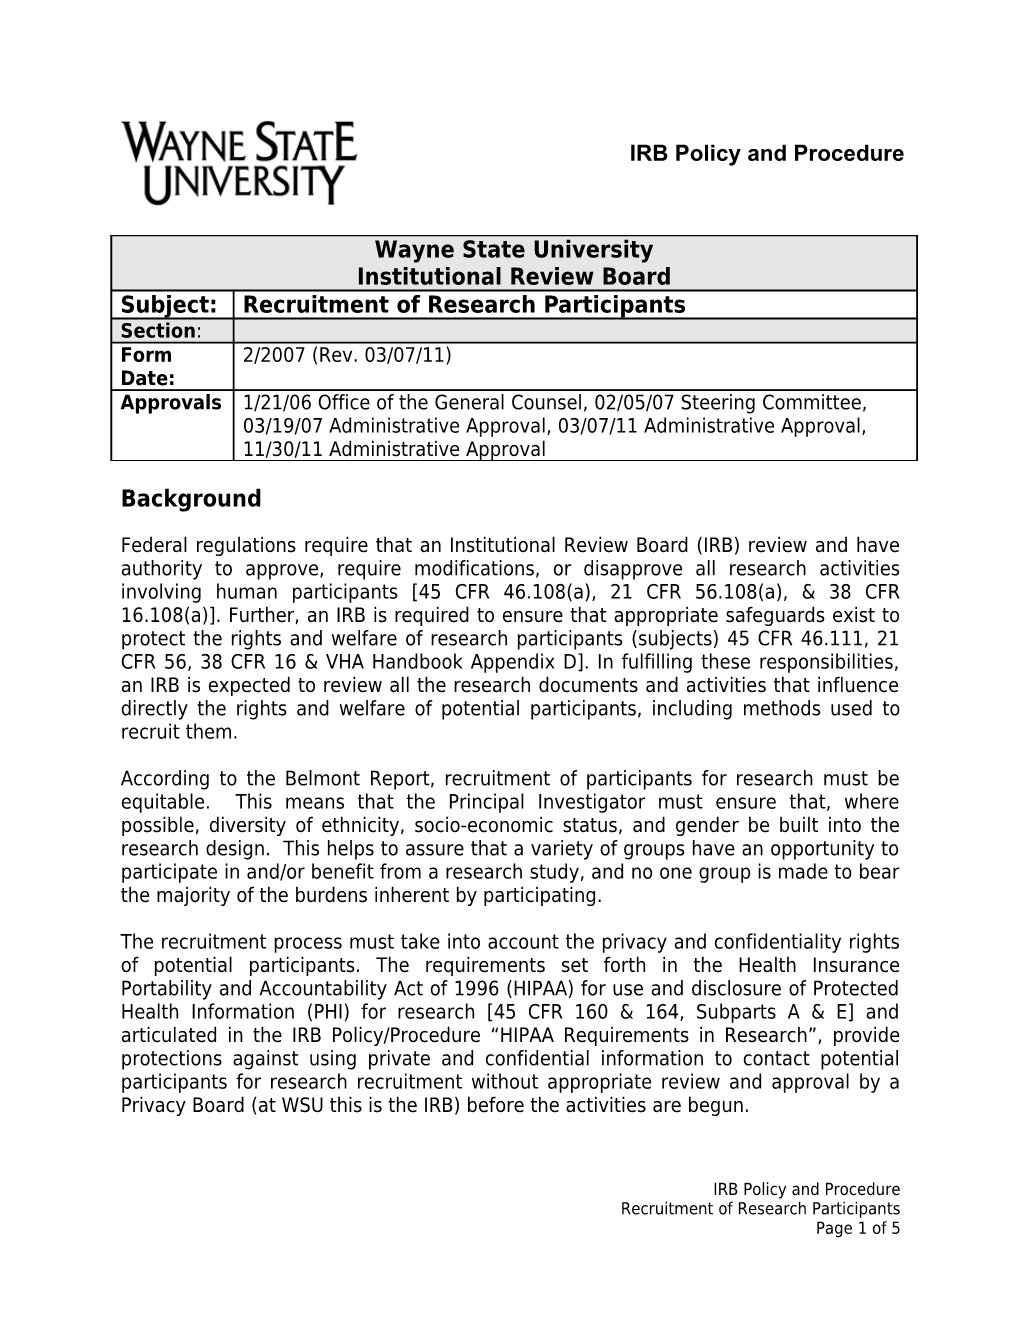 Recruitment of Research Participants